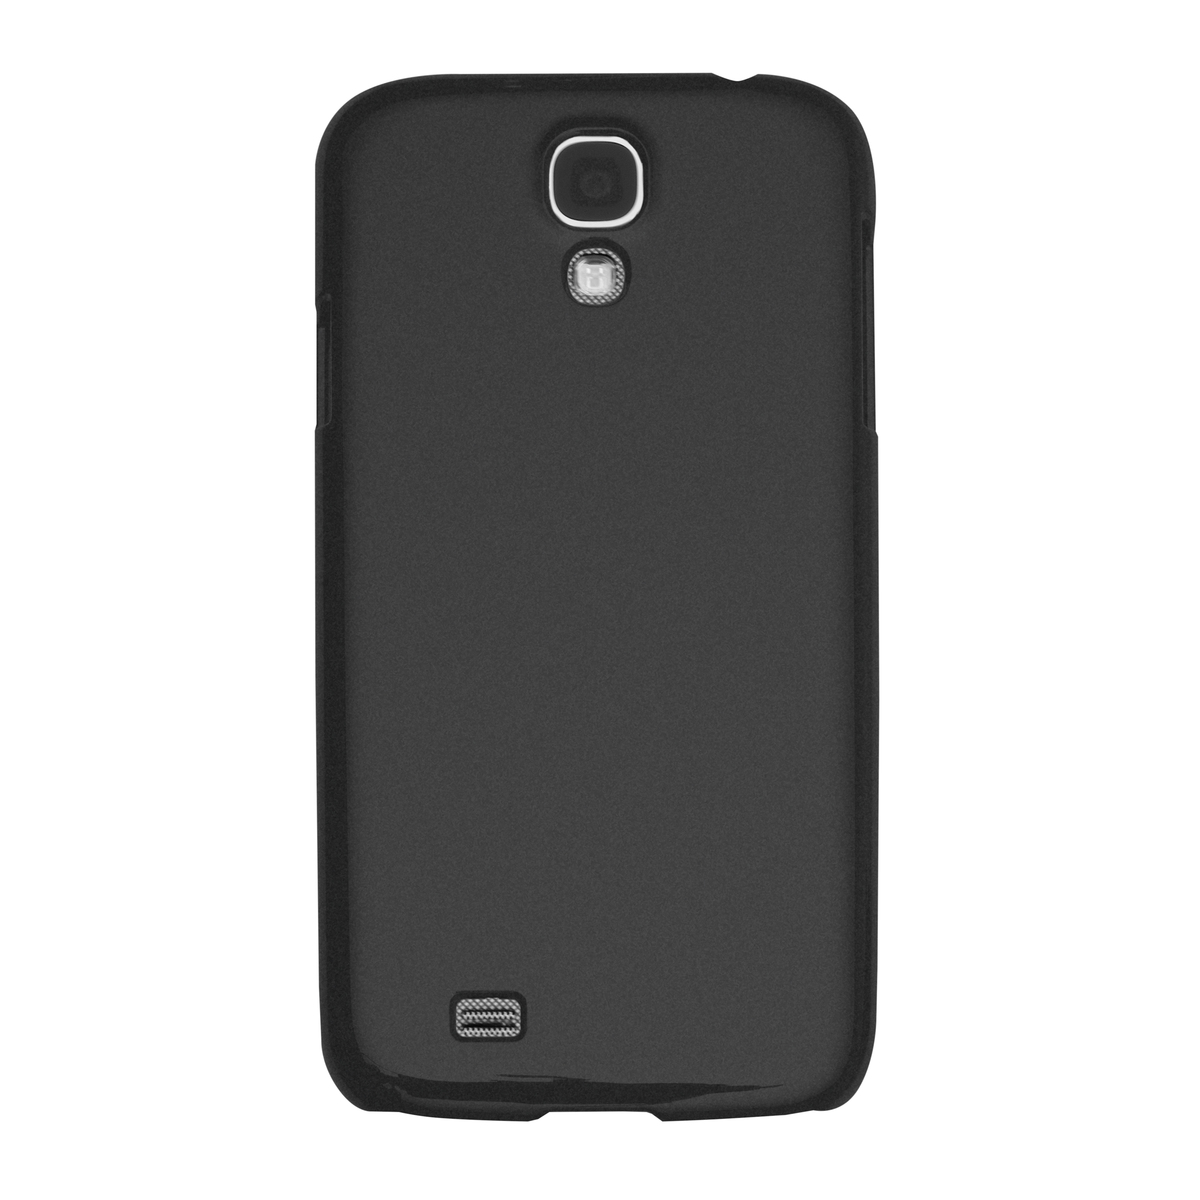 LM Smartphonecover REFLECTS-COVER VII Rubber für Galaxy S4 BLACK schwarz